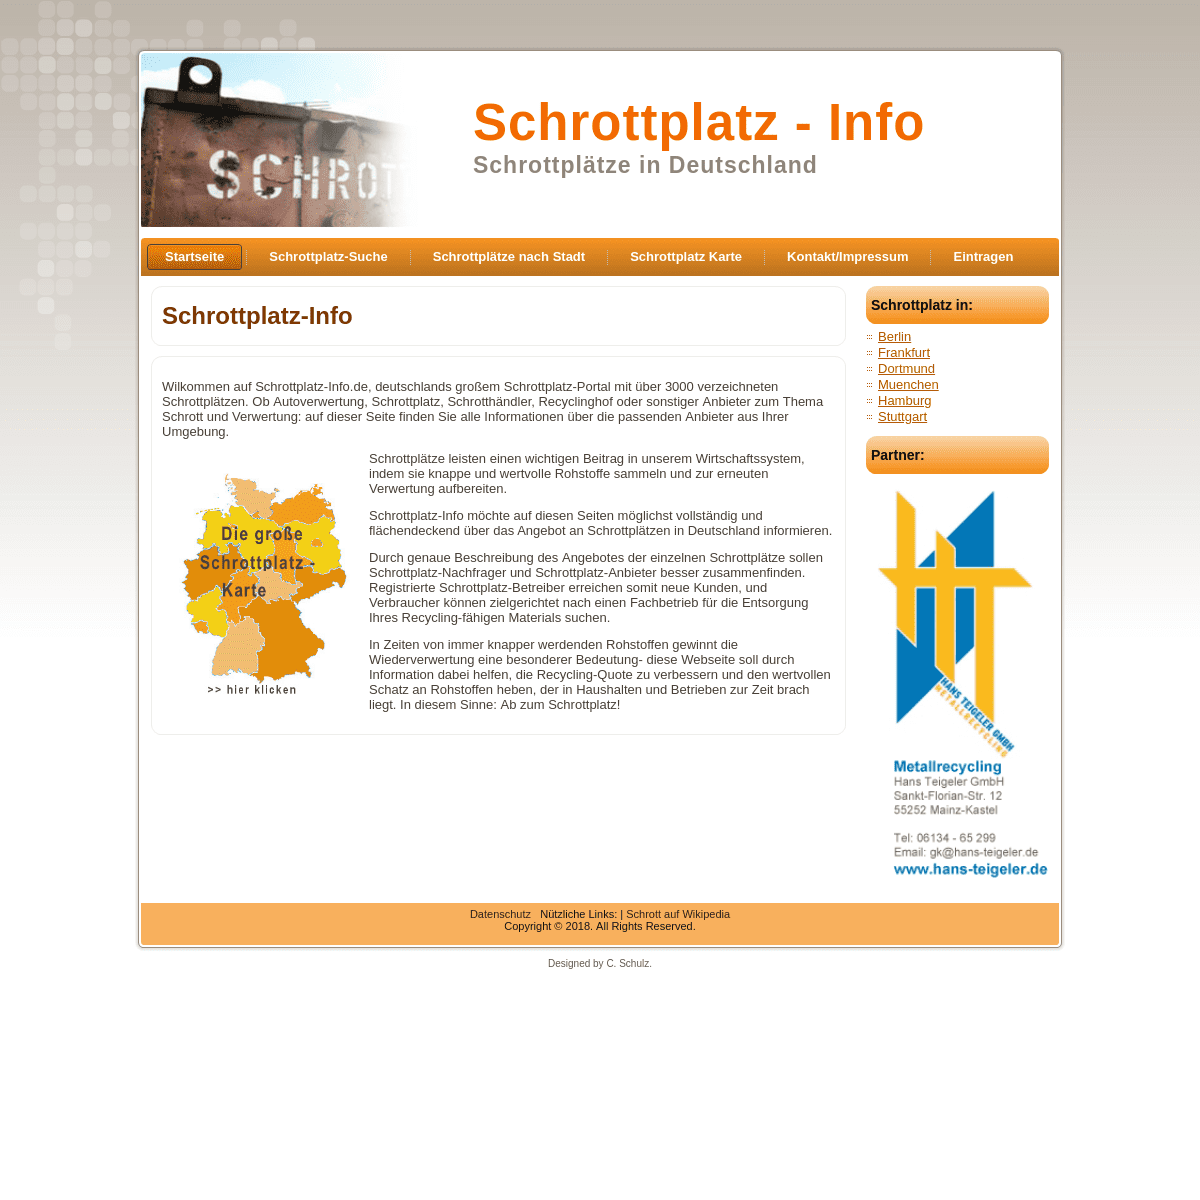 A complete backup of schrottplatz-info.de